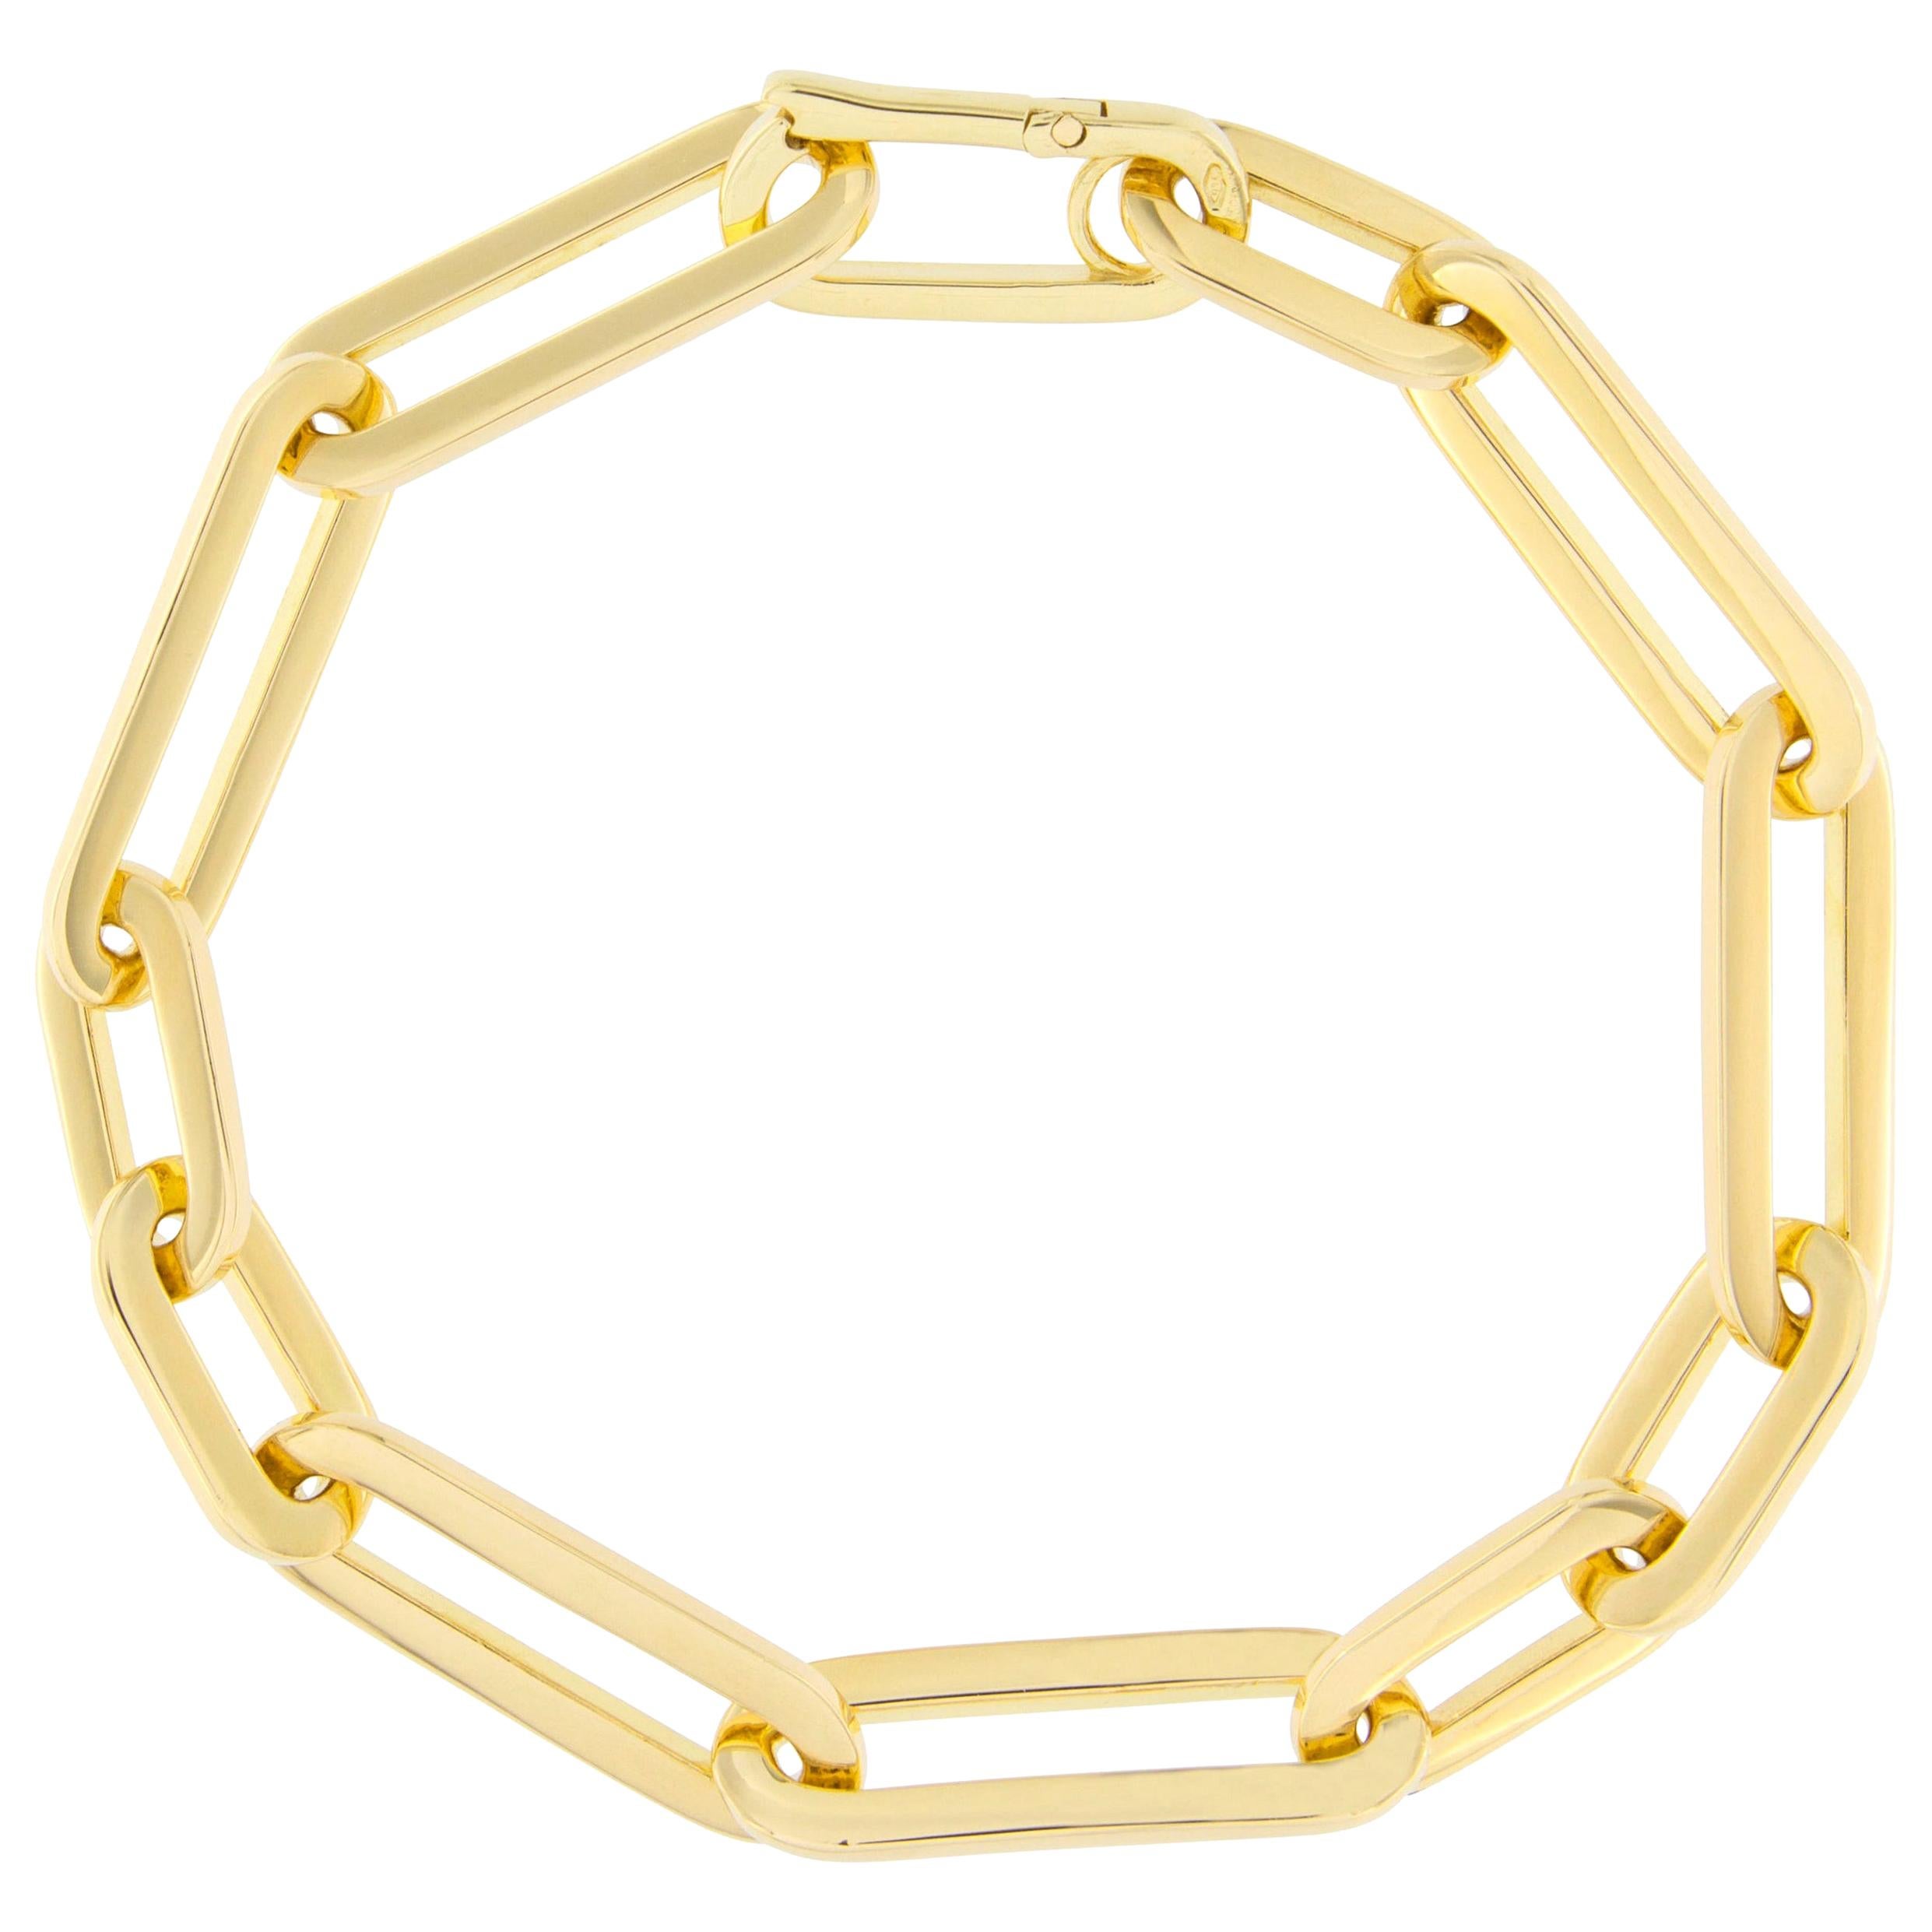 Jona 18 Karat Yellow Gold Link Chain Bracelet